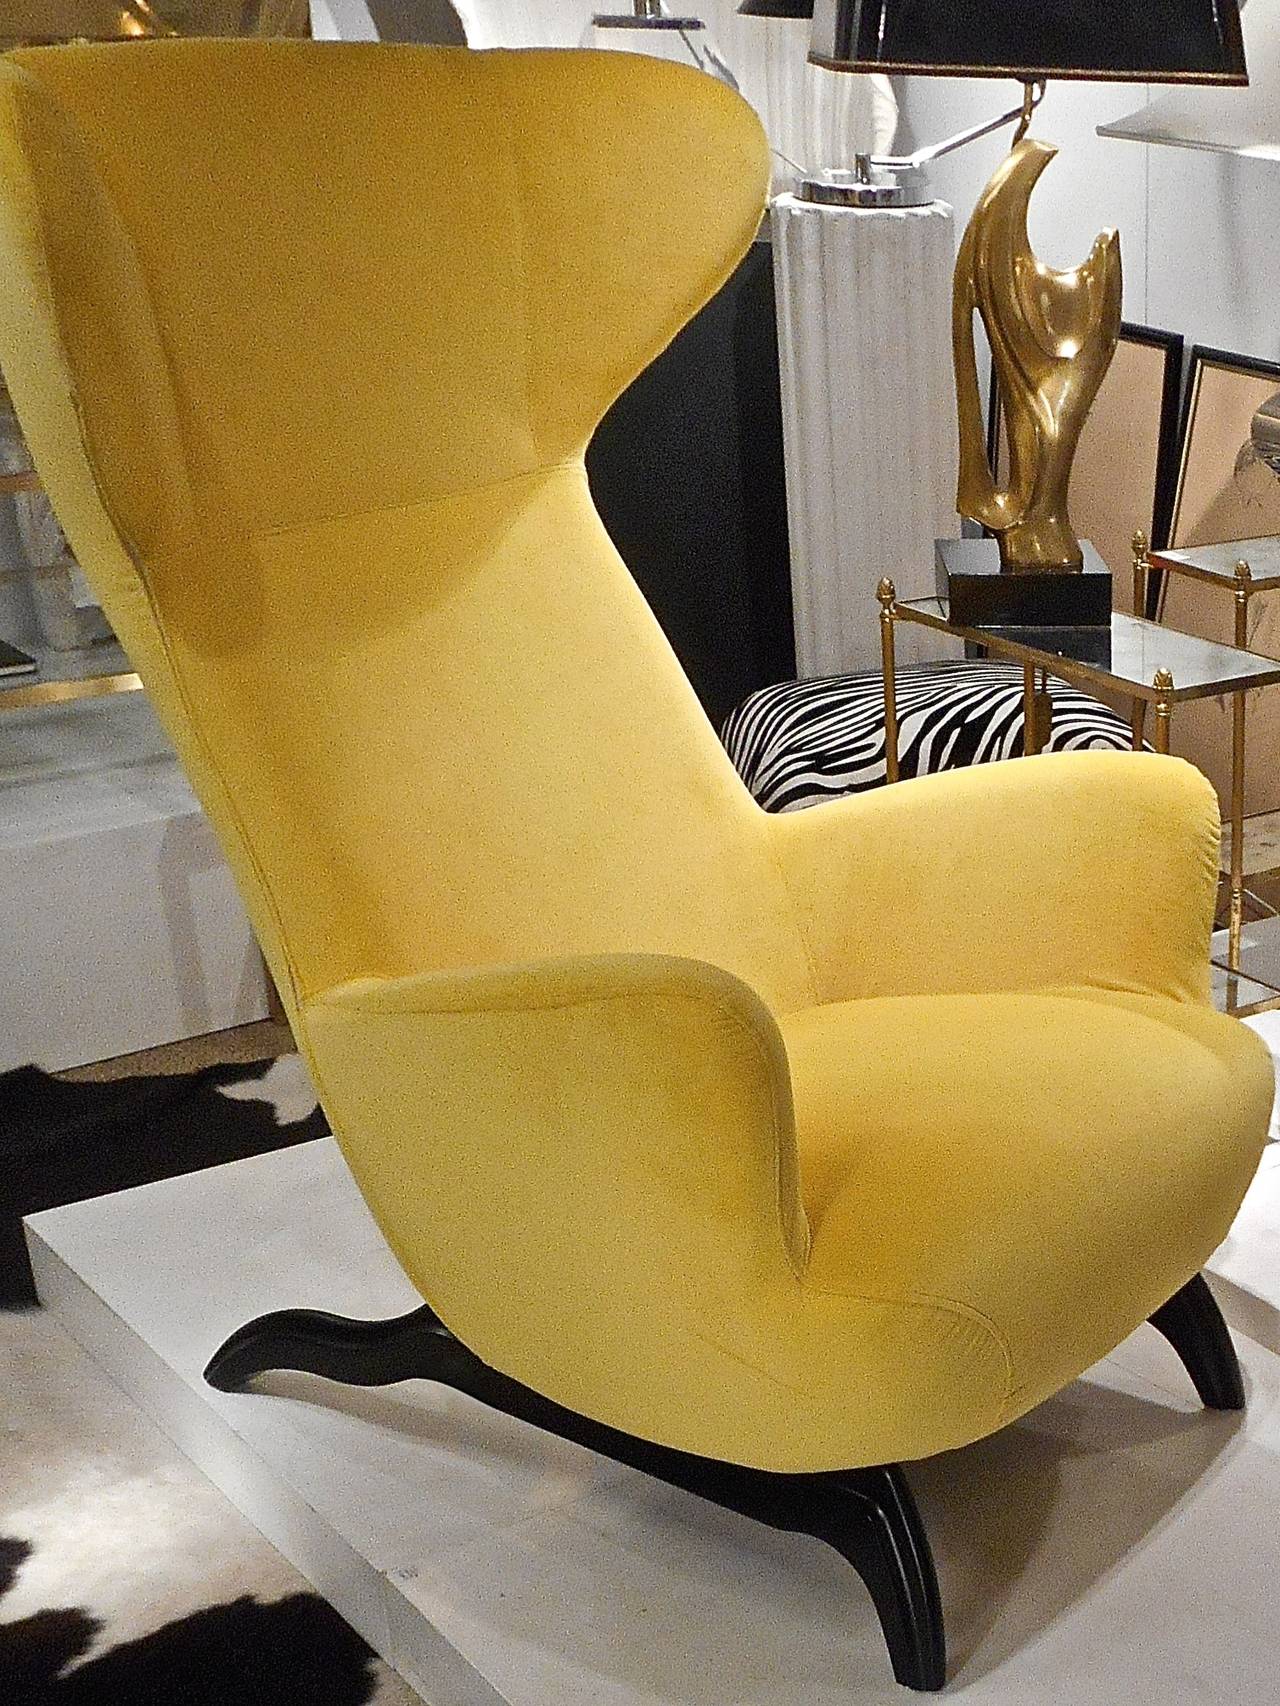 Ardea armchair  (Zanotta).
Lining is removable.
Yellow velvet ,new upholstery,mint condition.
Black ebonized feet.